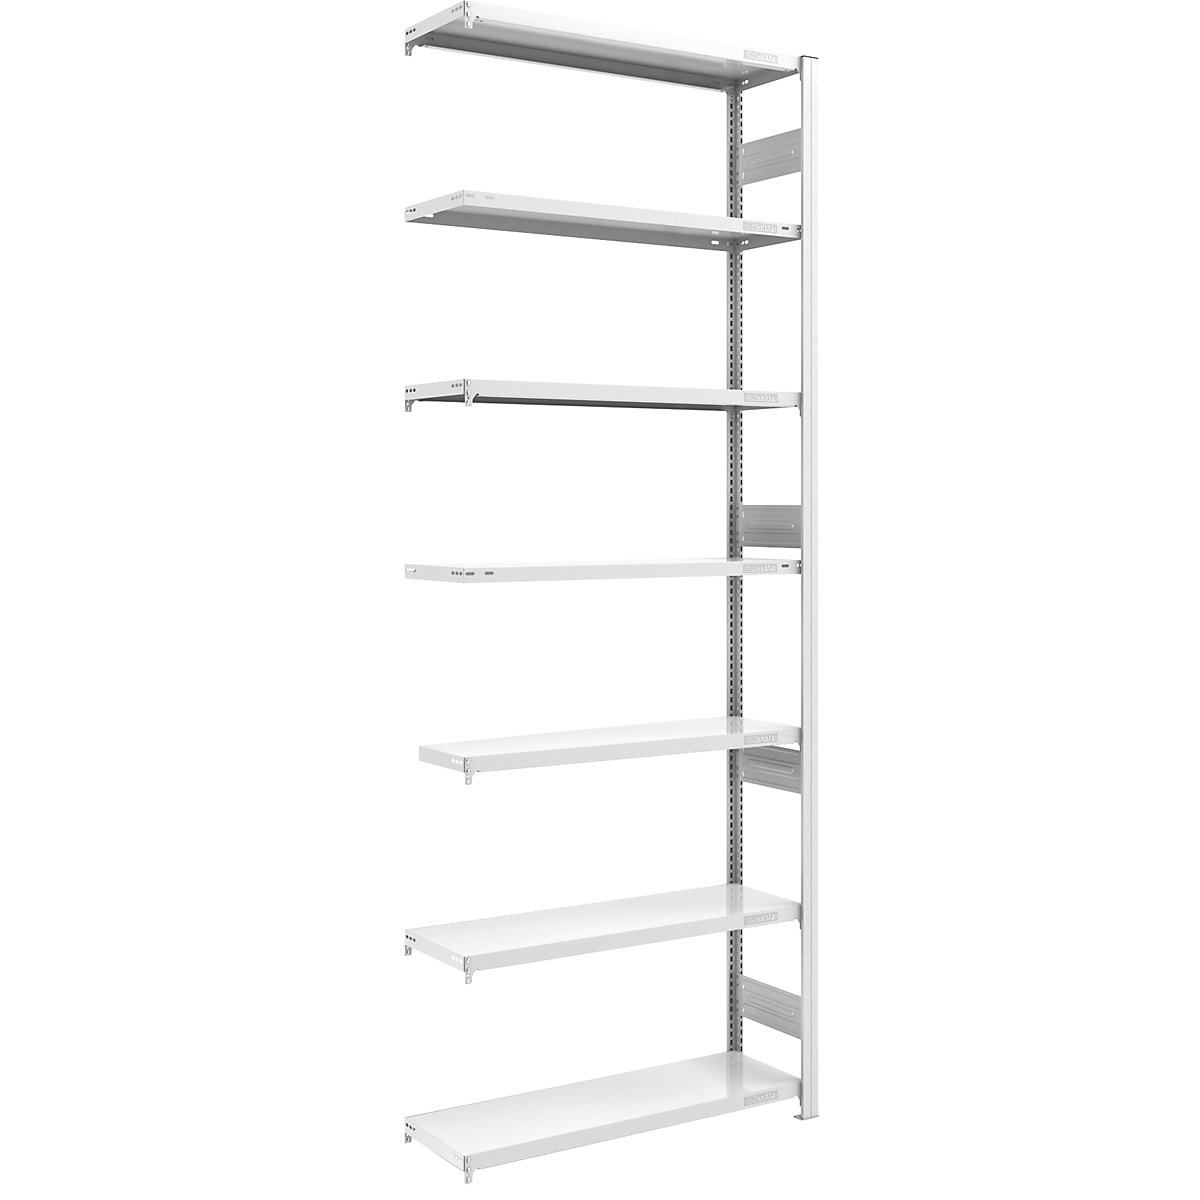 Heavy duty boltless shelving unit, grey, double sided – hofe, shelf unit height 3000 mm, 7 shelves, extension shelf unit, WxD 1000 x 400 mm-16